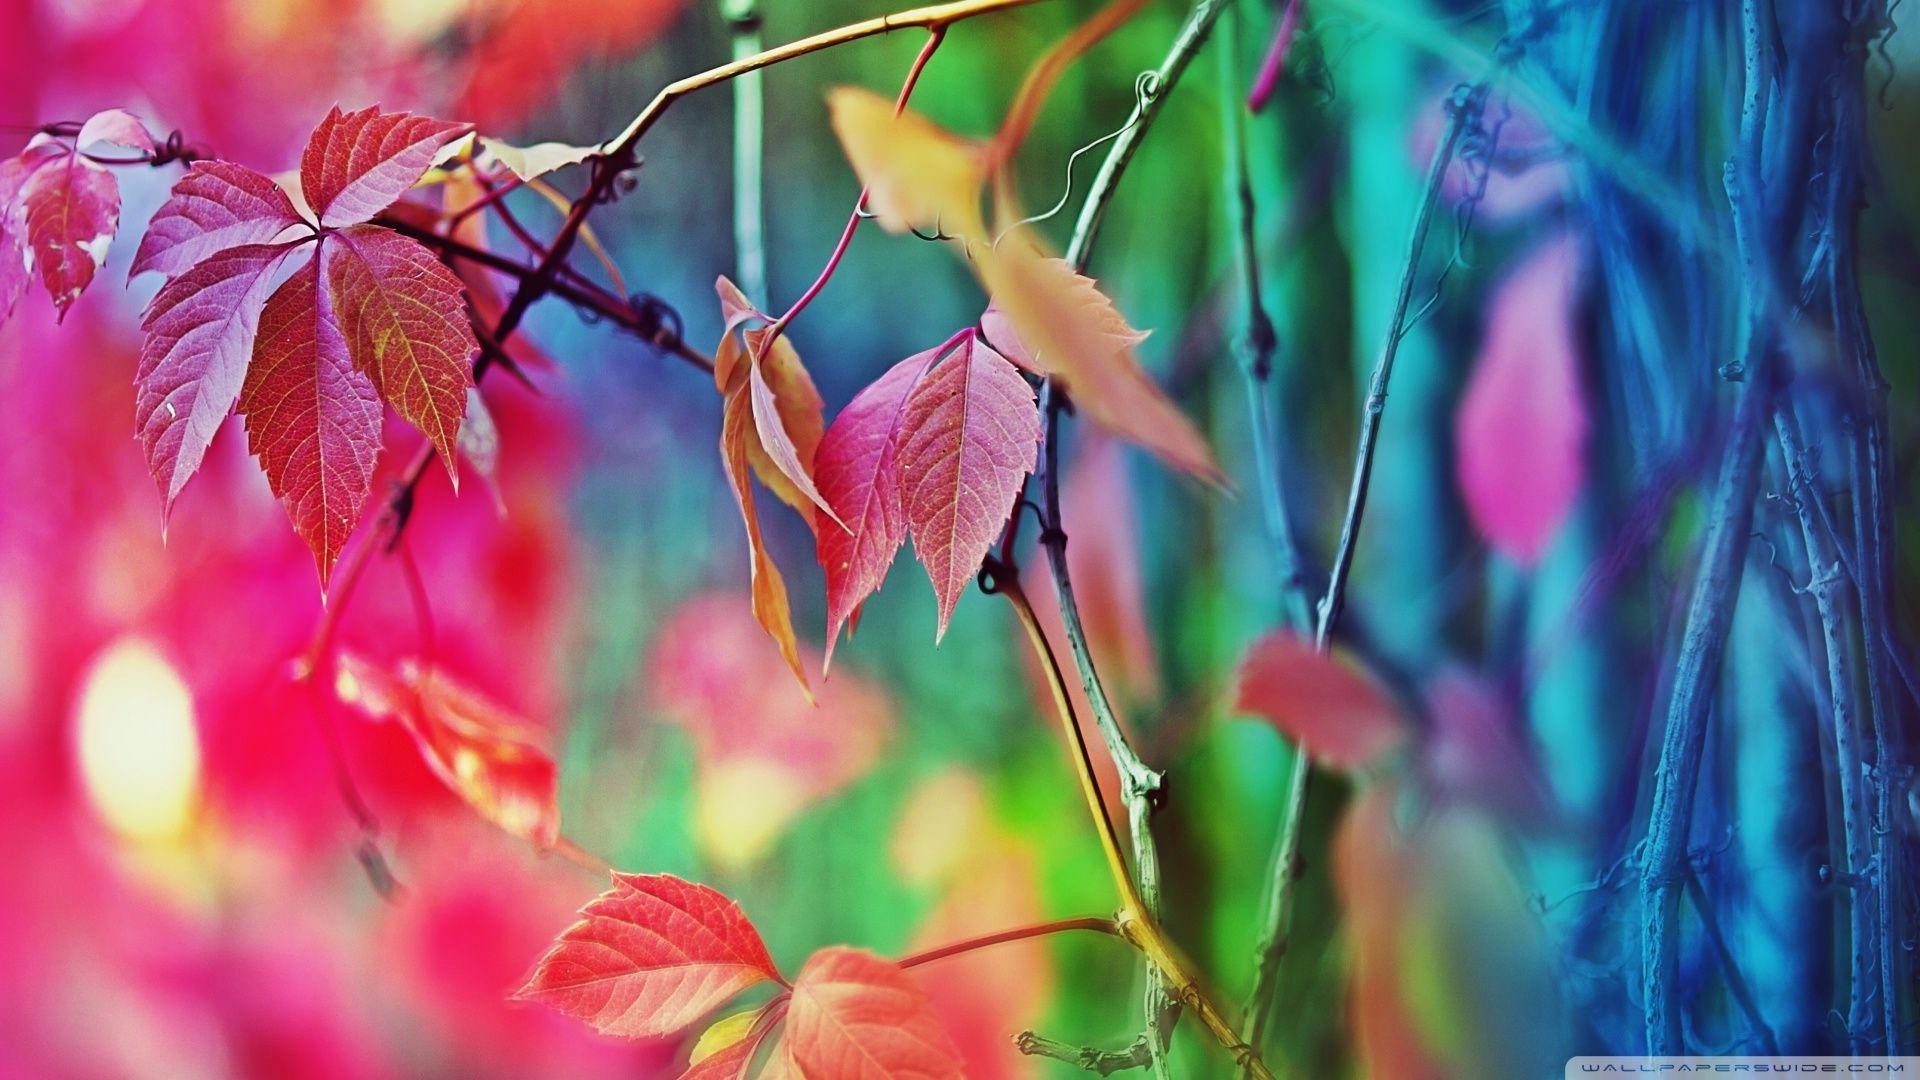 Colorful Leaves ❤ 4K HD Desktop Wallpaper for 4K Ultra HD TV • Dual